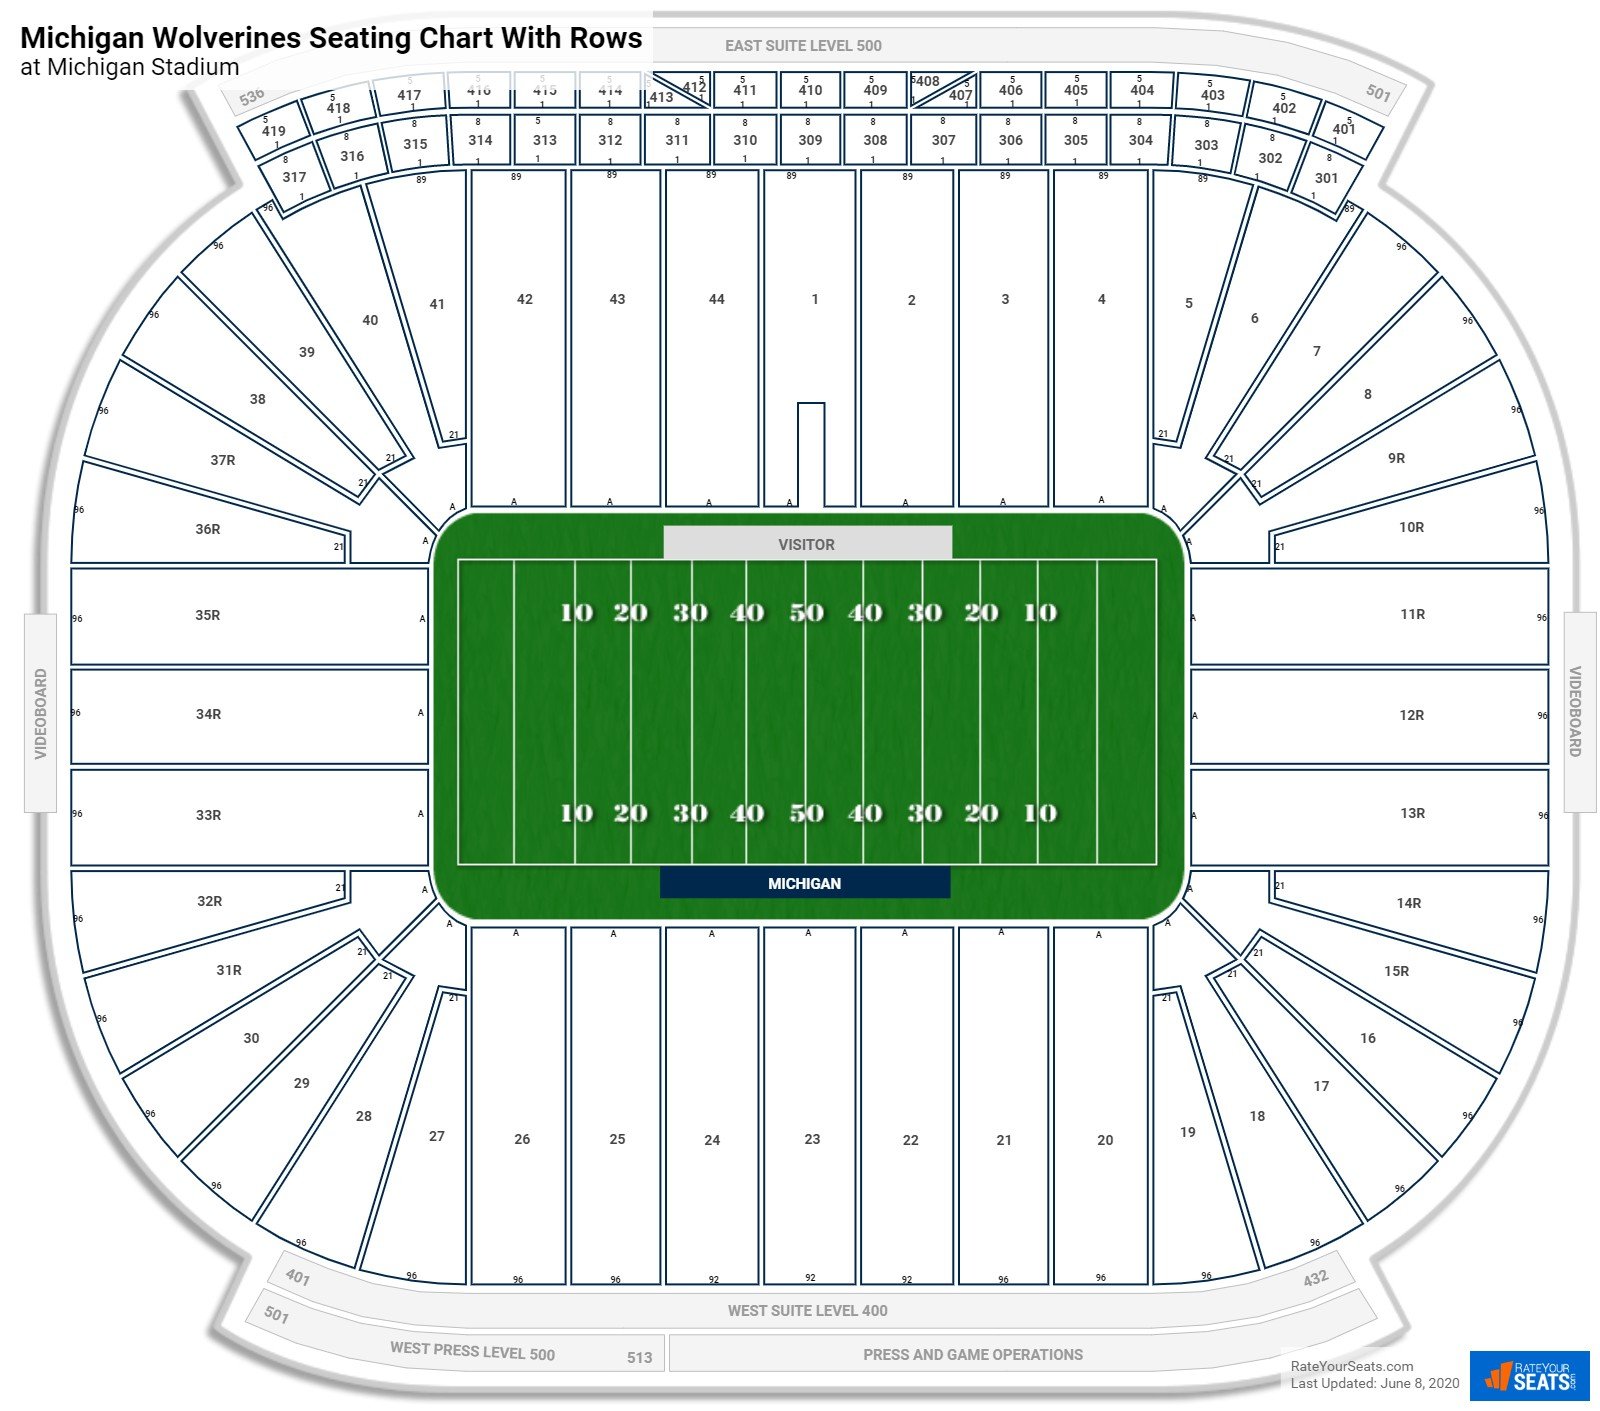 Michigan Stadium seating chart with row numbers